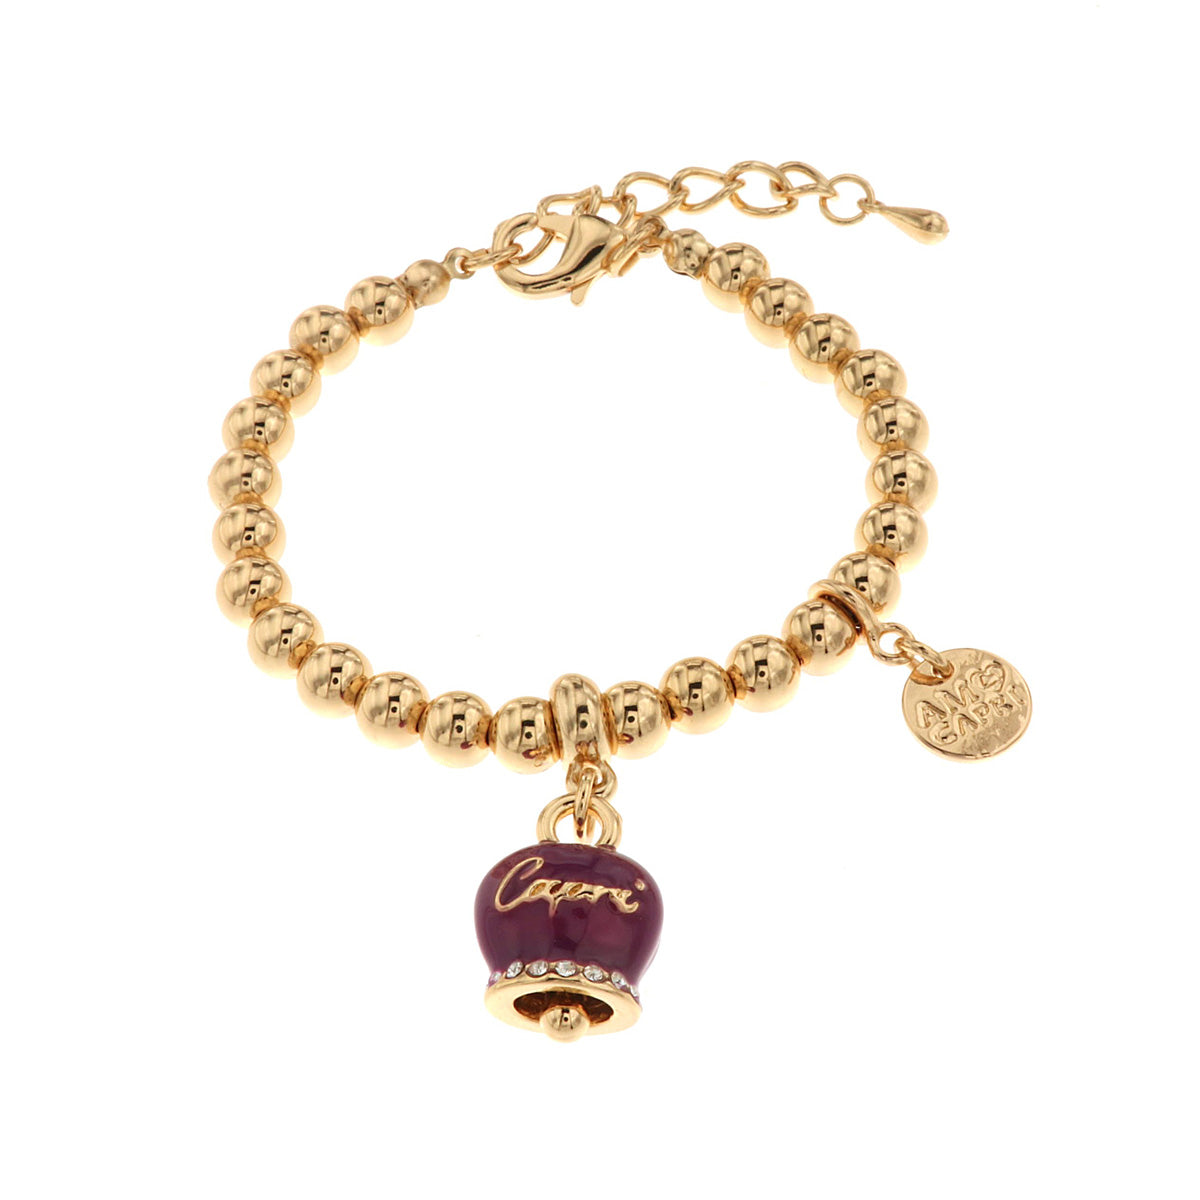 Metal bracelet with bell pendant purple with capri writing